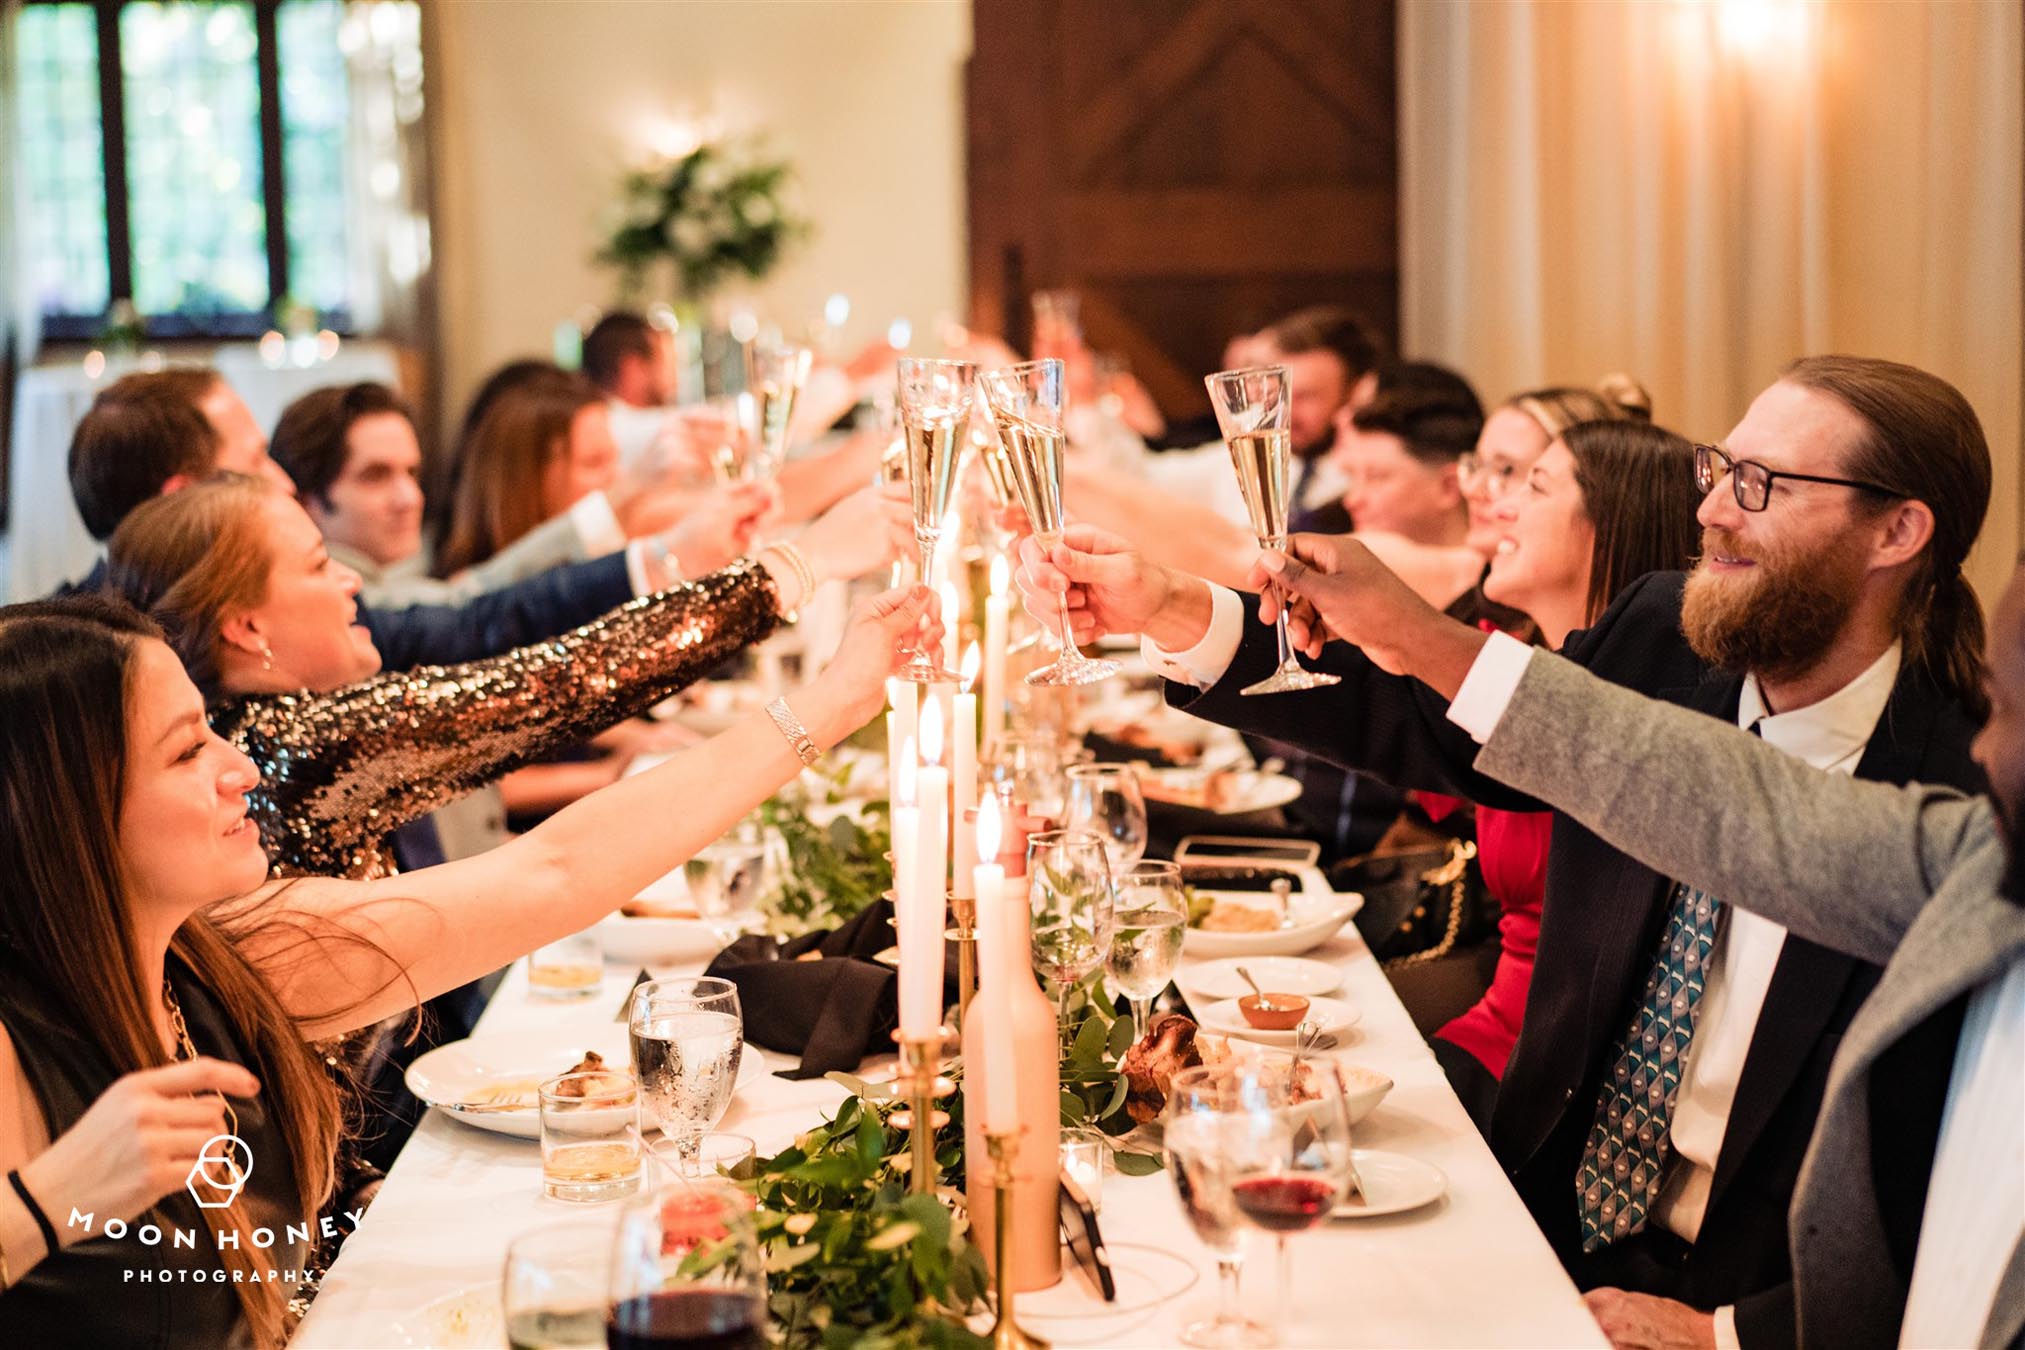 Guests toasting at wedding